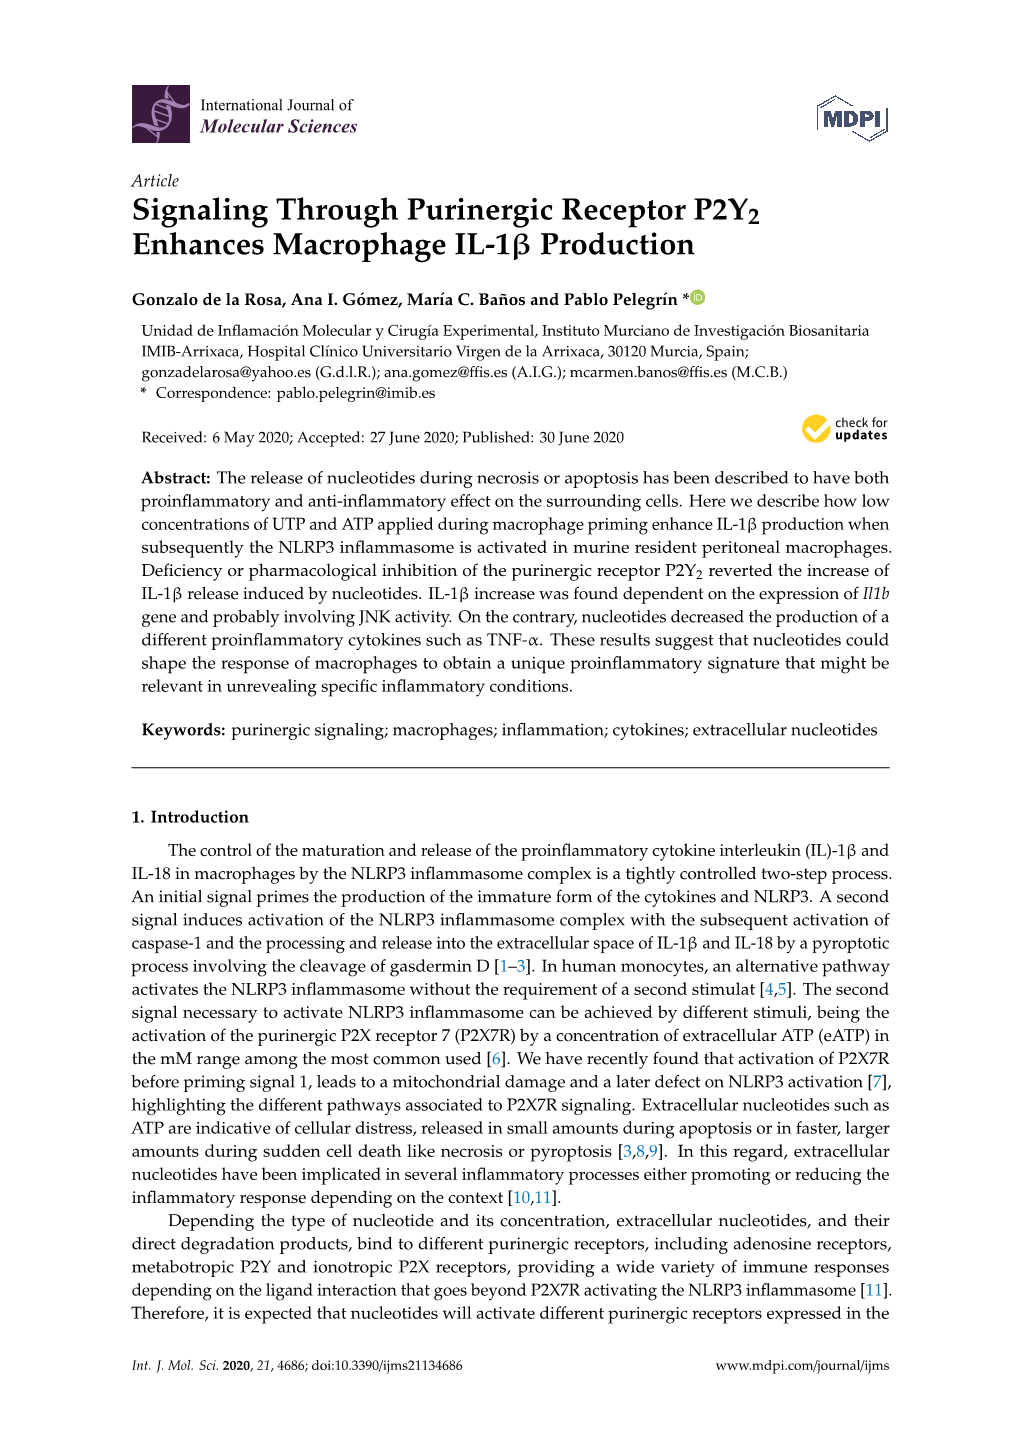 Signaling Through Purinergic Receptor P2Y2 Enhances Macrophage IL-1Β Production